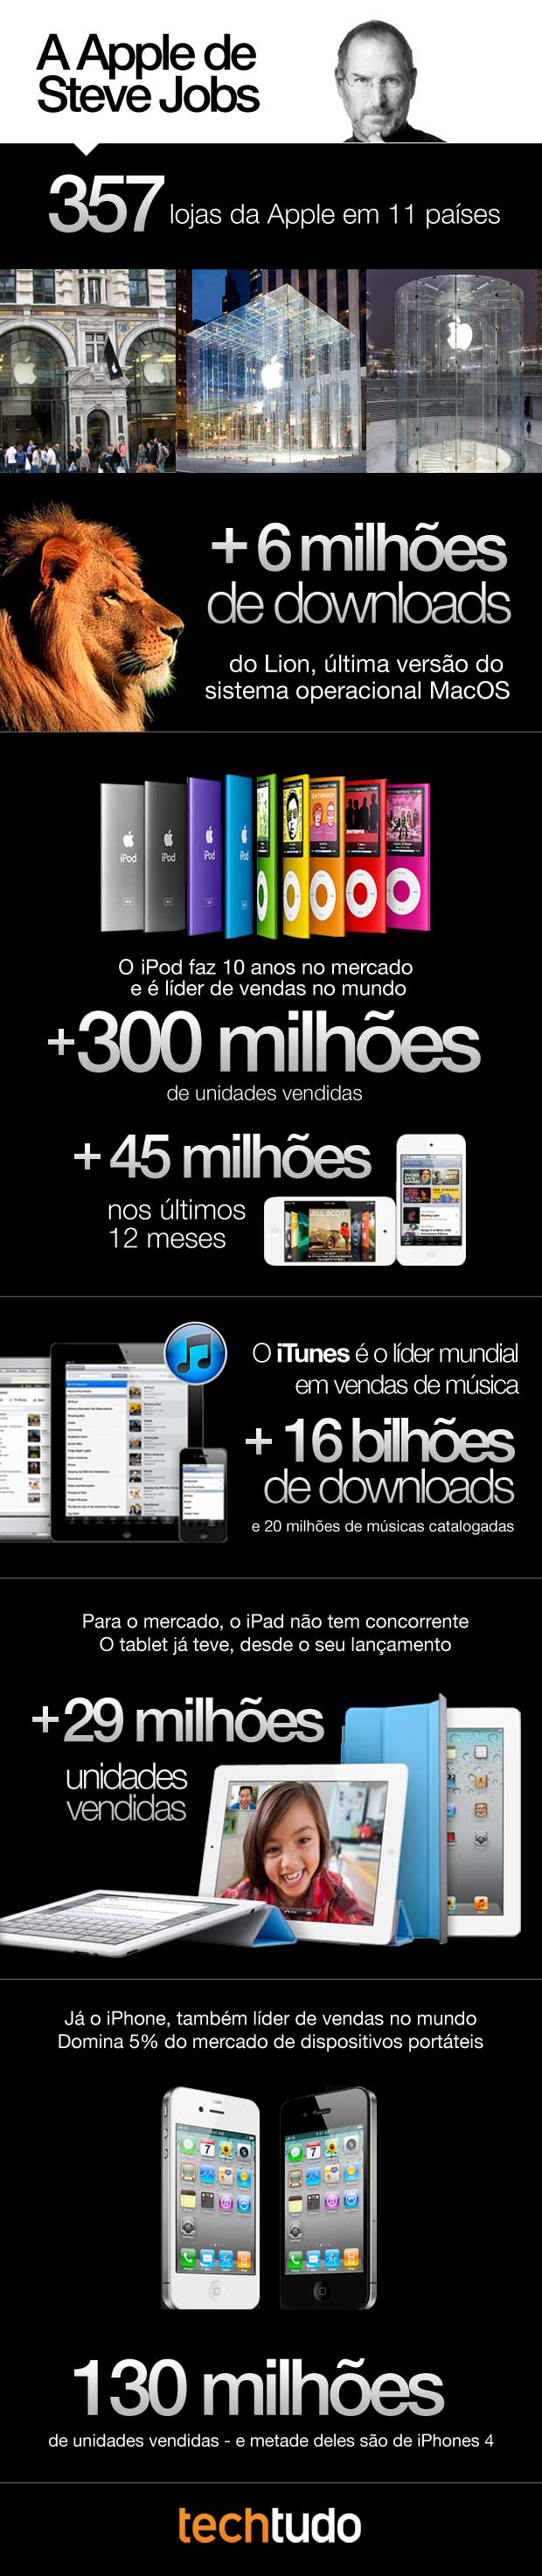 A Apple de Steve Jobs, infográfico. (Foto: TechTudo)